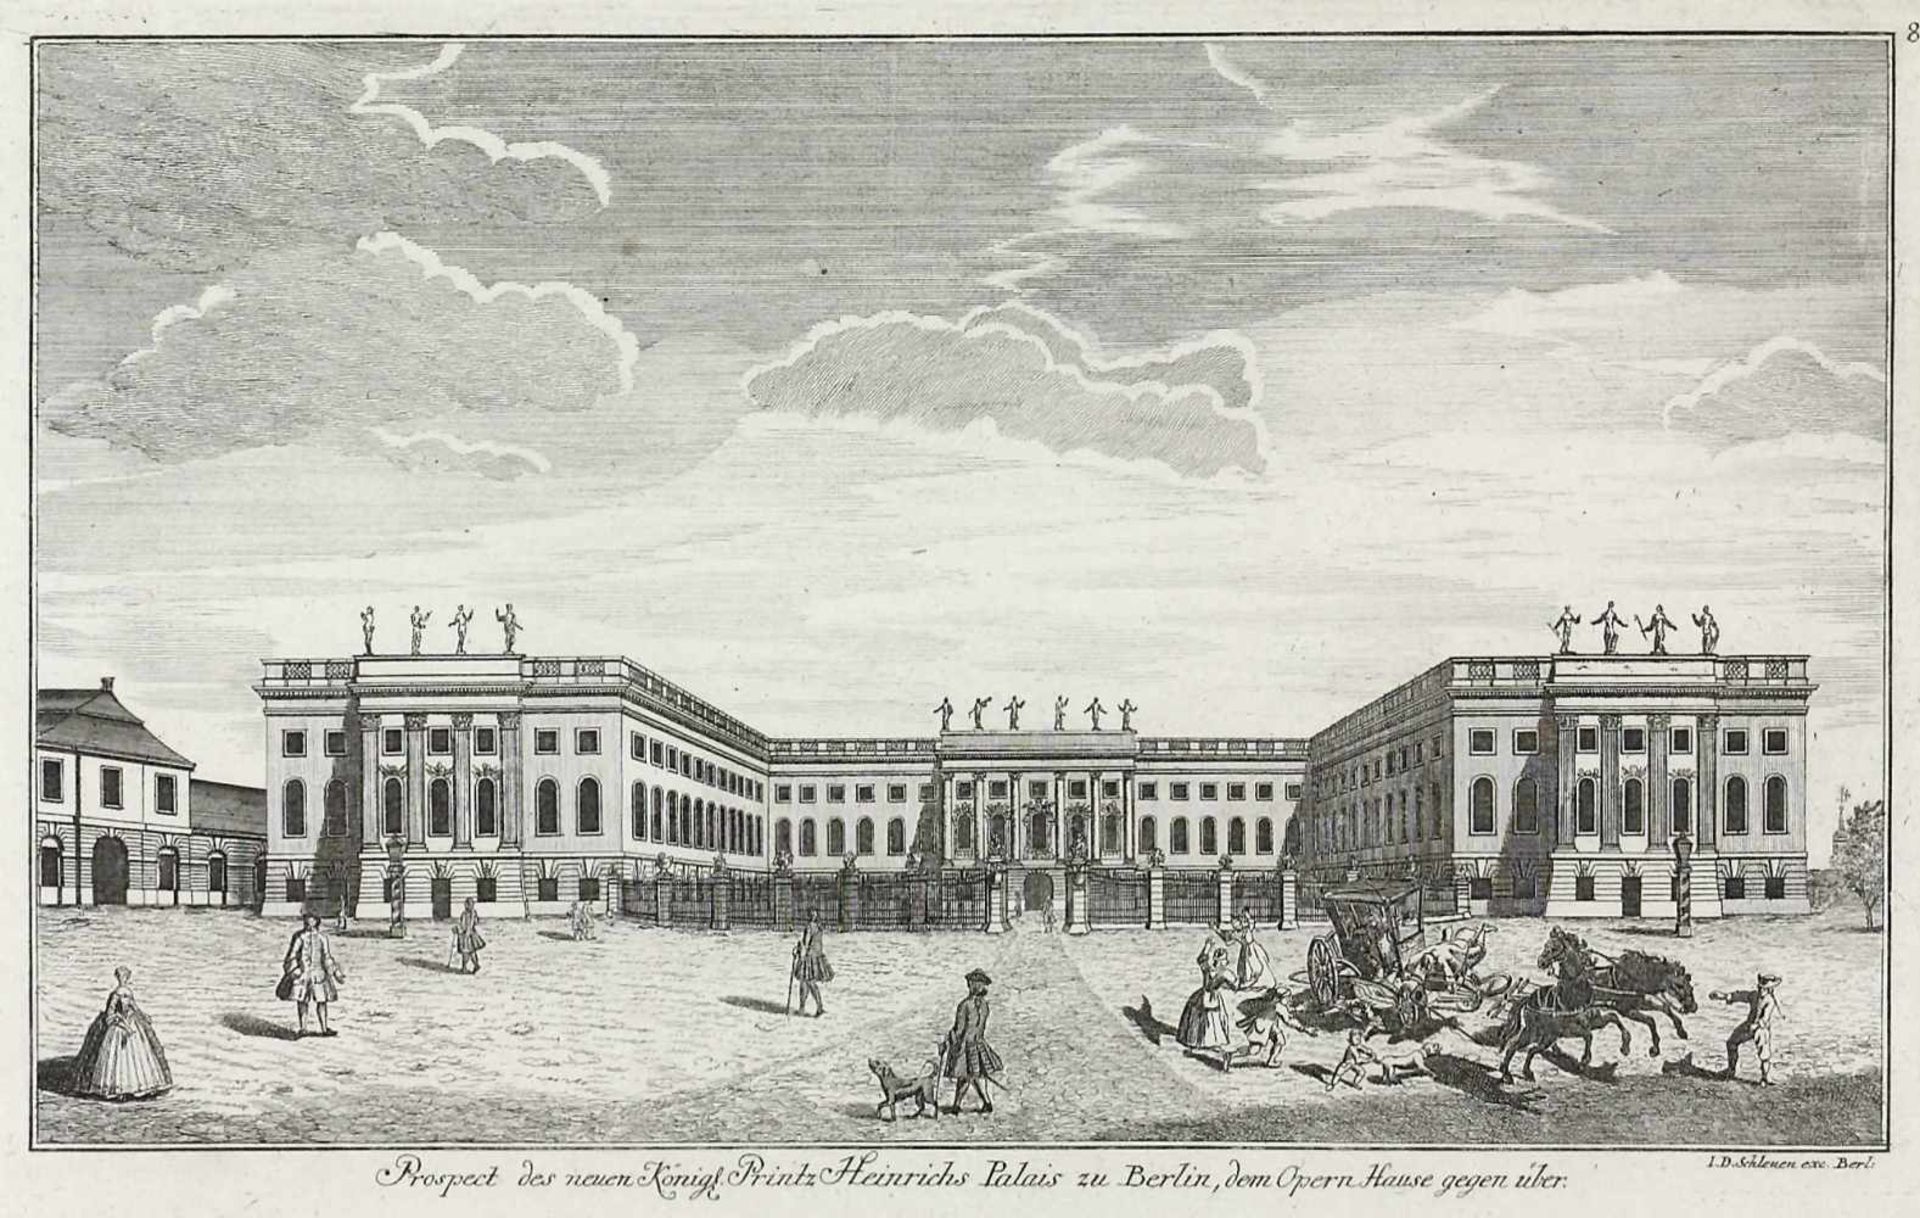 Ansicht, Berlin, J. D. Schleuen, um 1750 Prospect des neuen Königl. Printz Heinrichs Palais zu